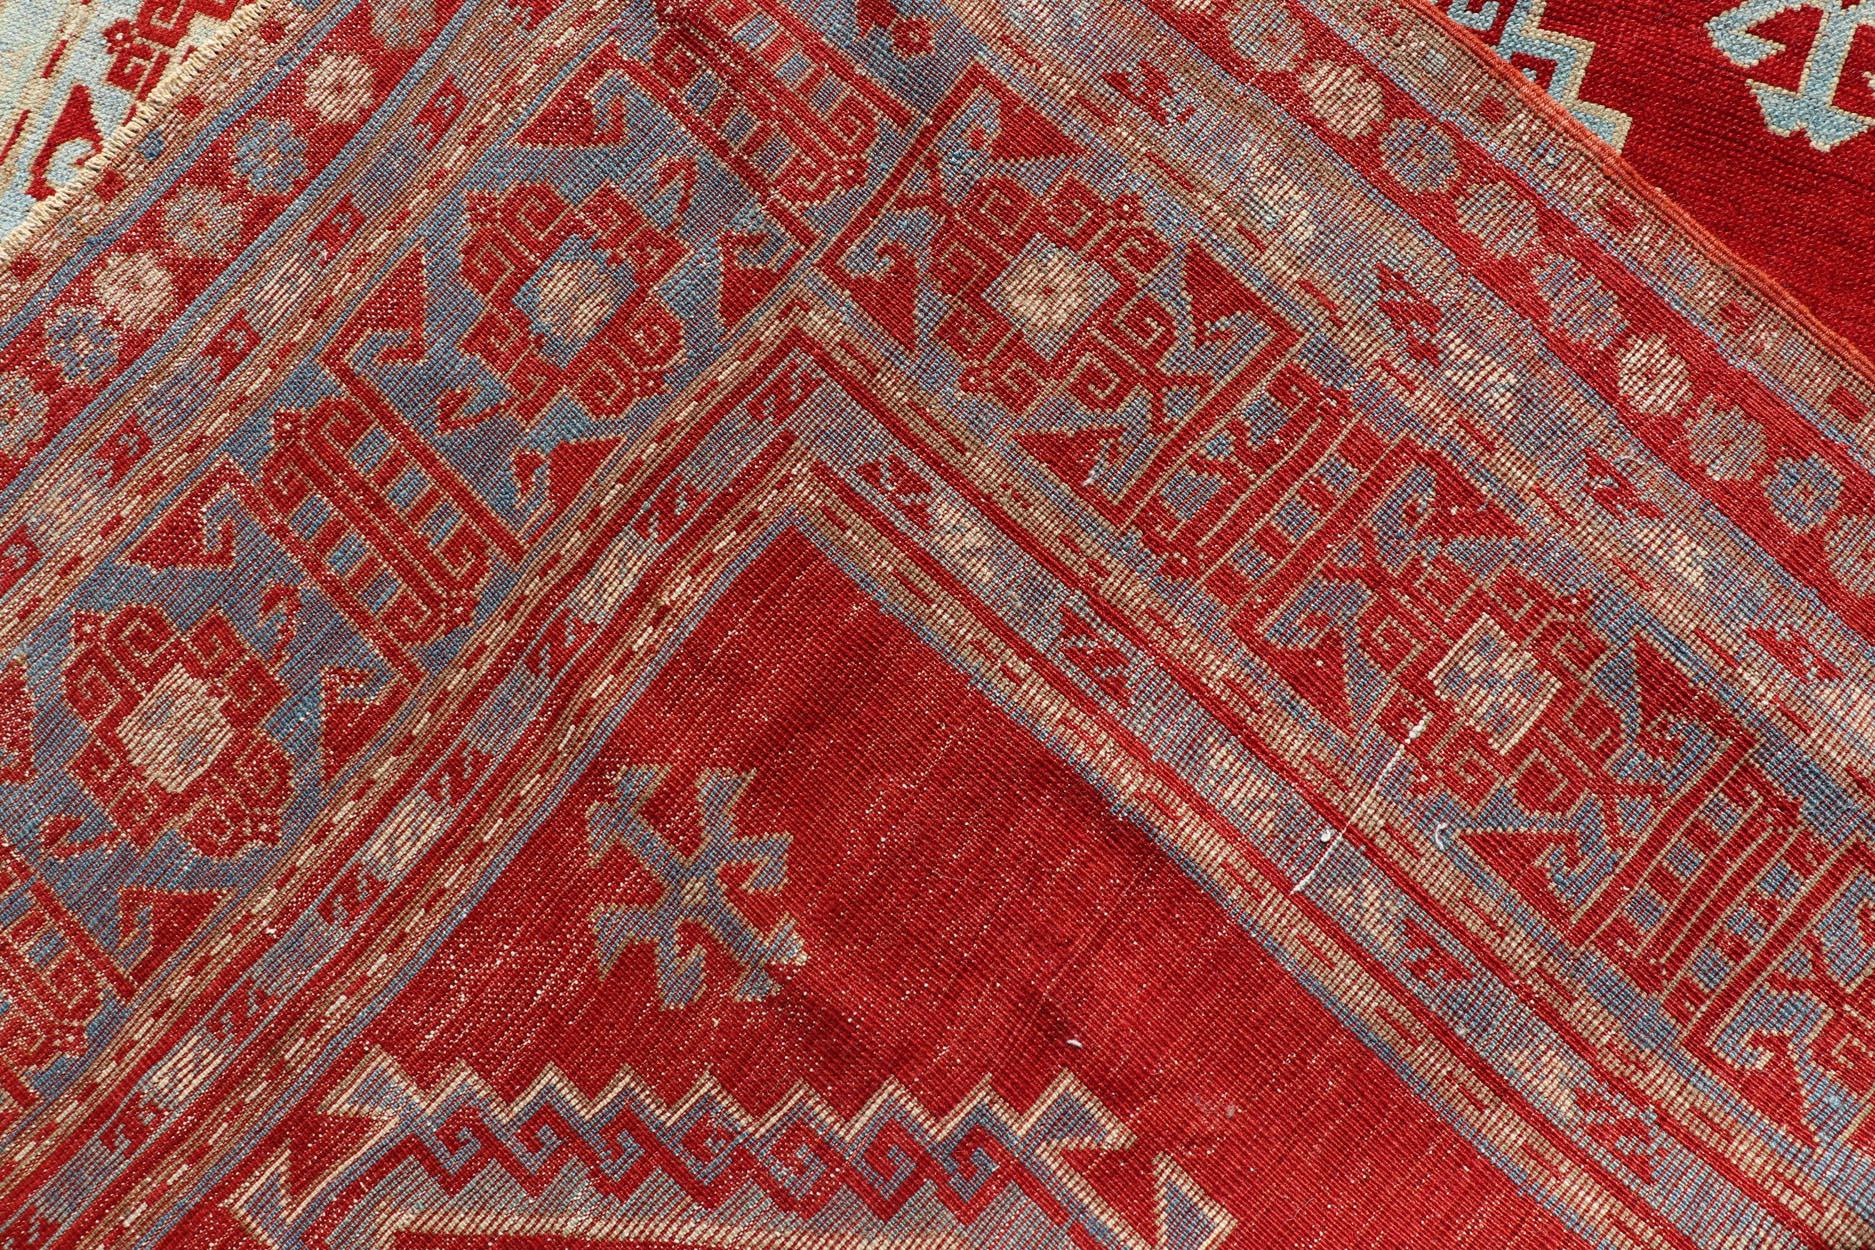 Antique Caucasian Kazak Gallery Rug in Brilliant Red with Geometric Design For Sale 6